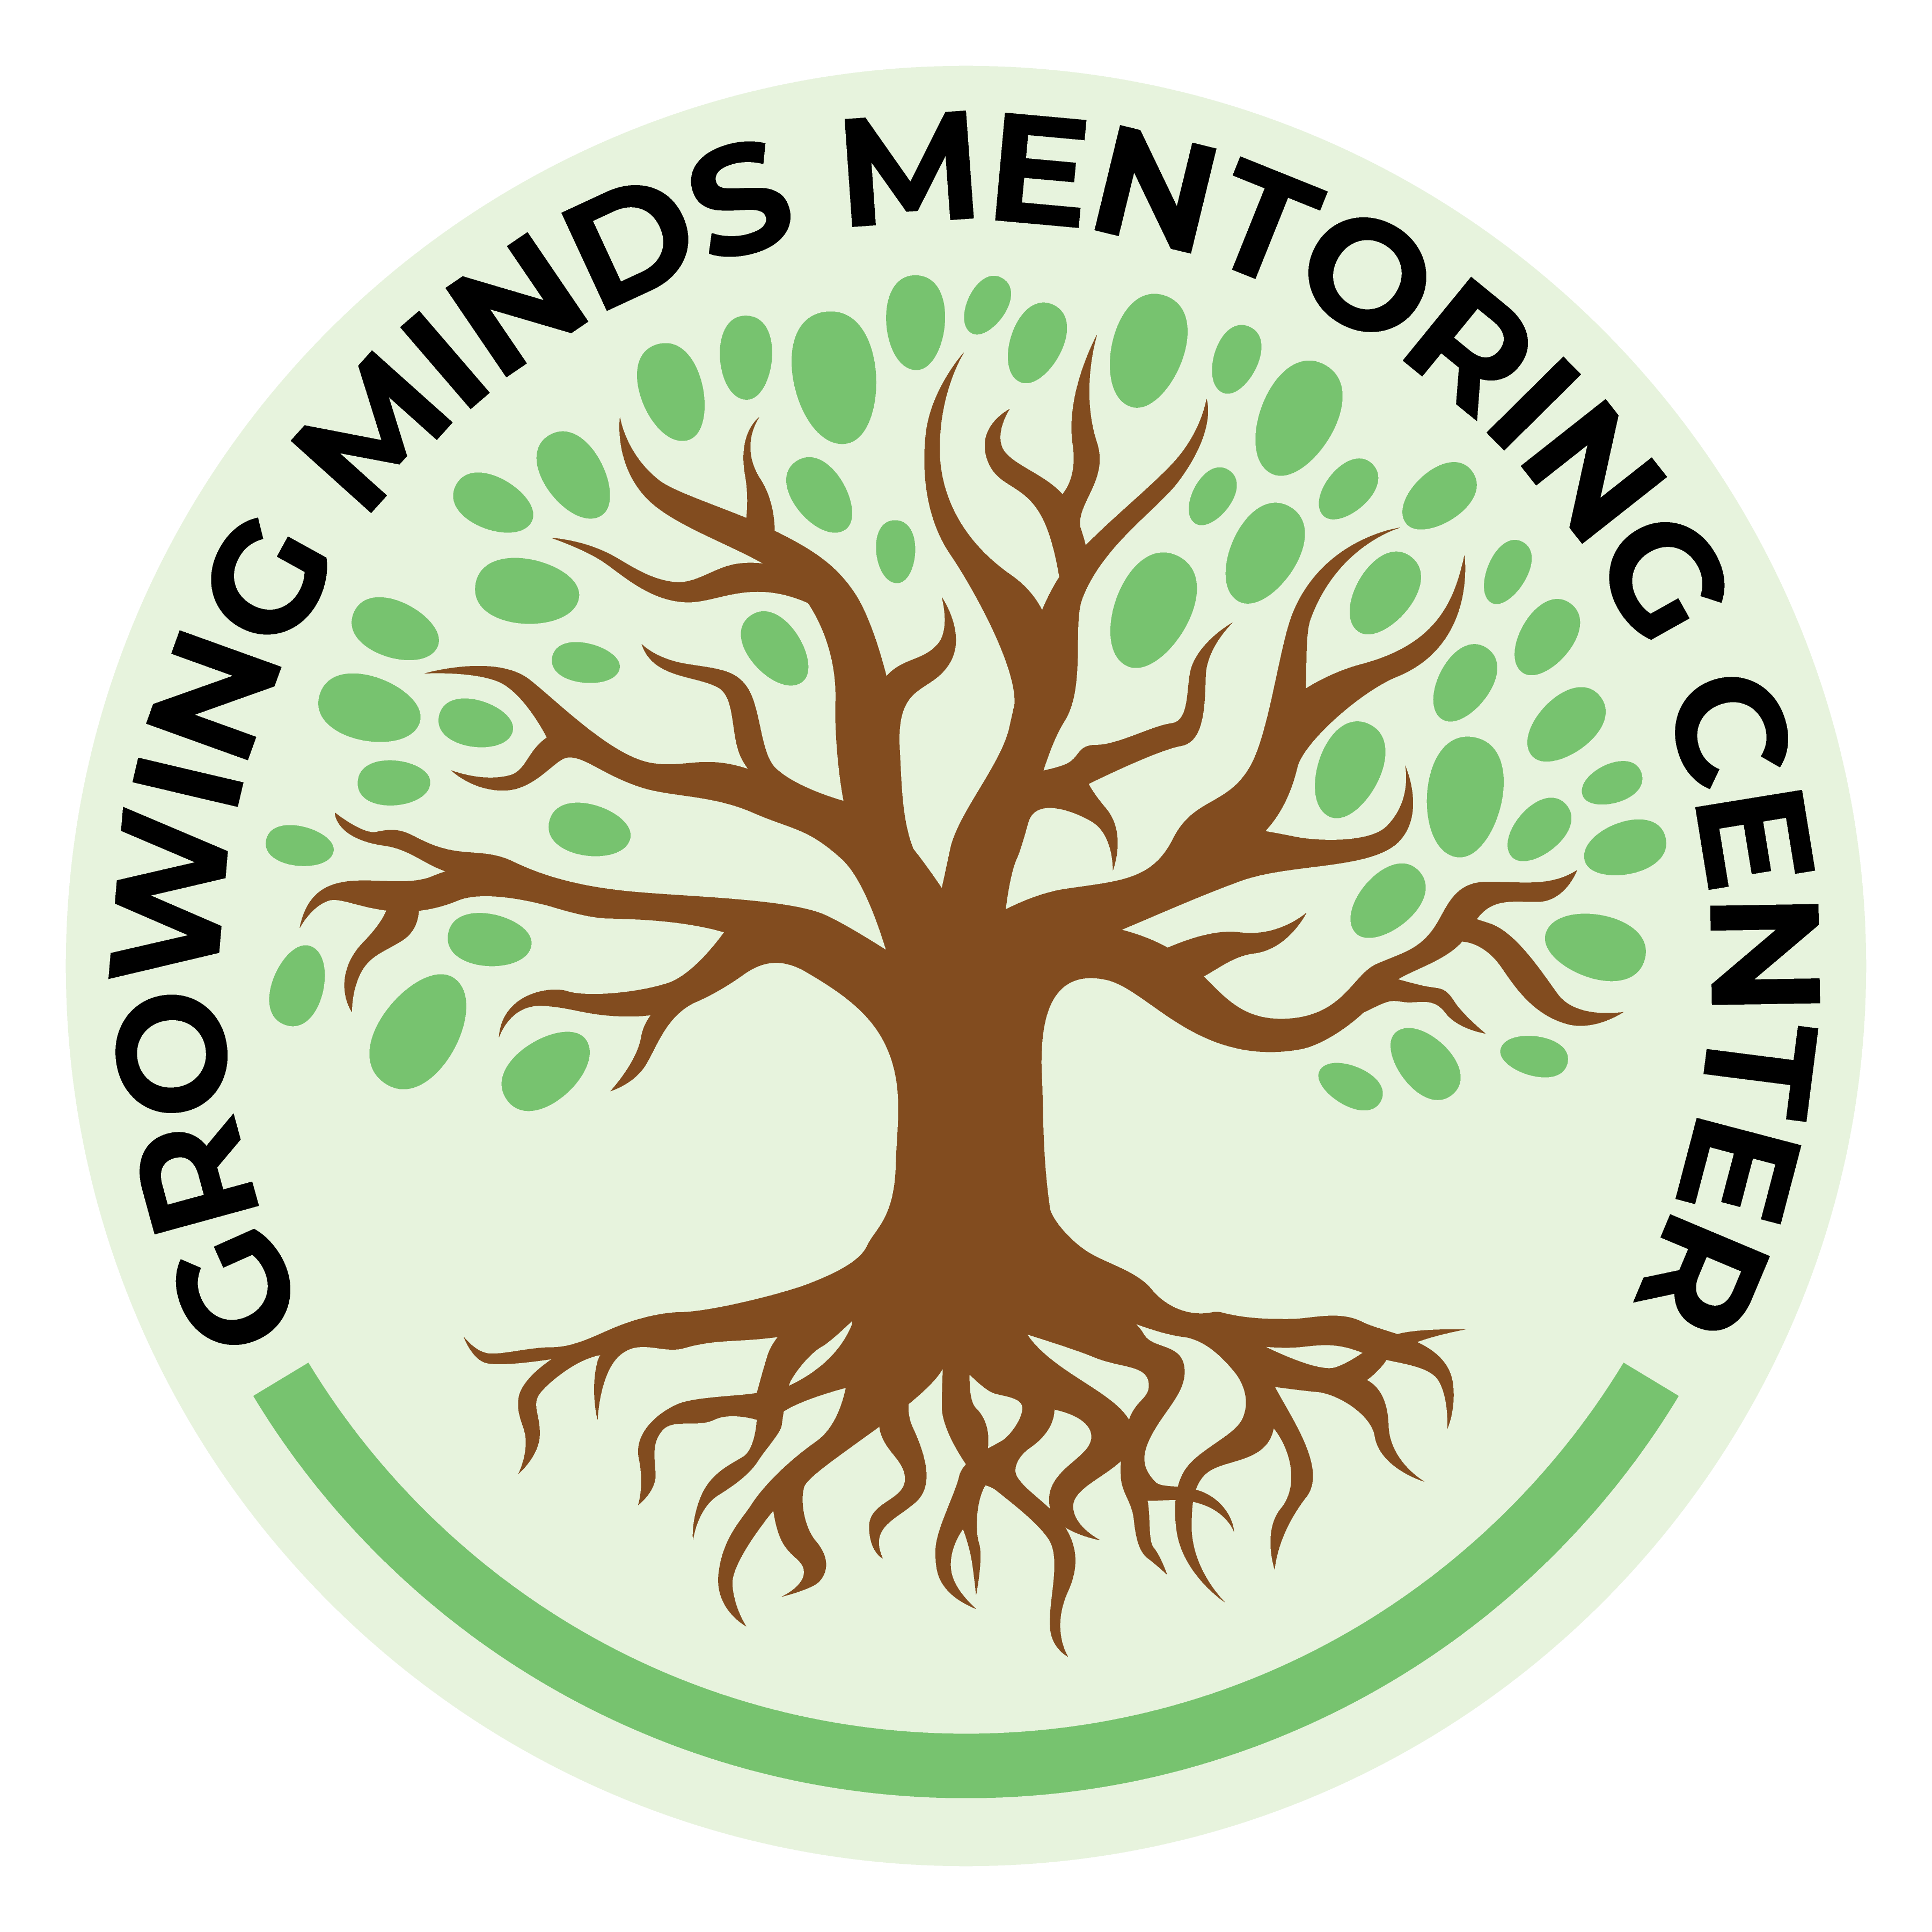 Growing Minds Mentoring Center